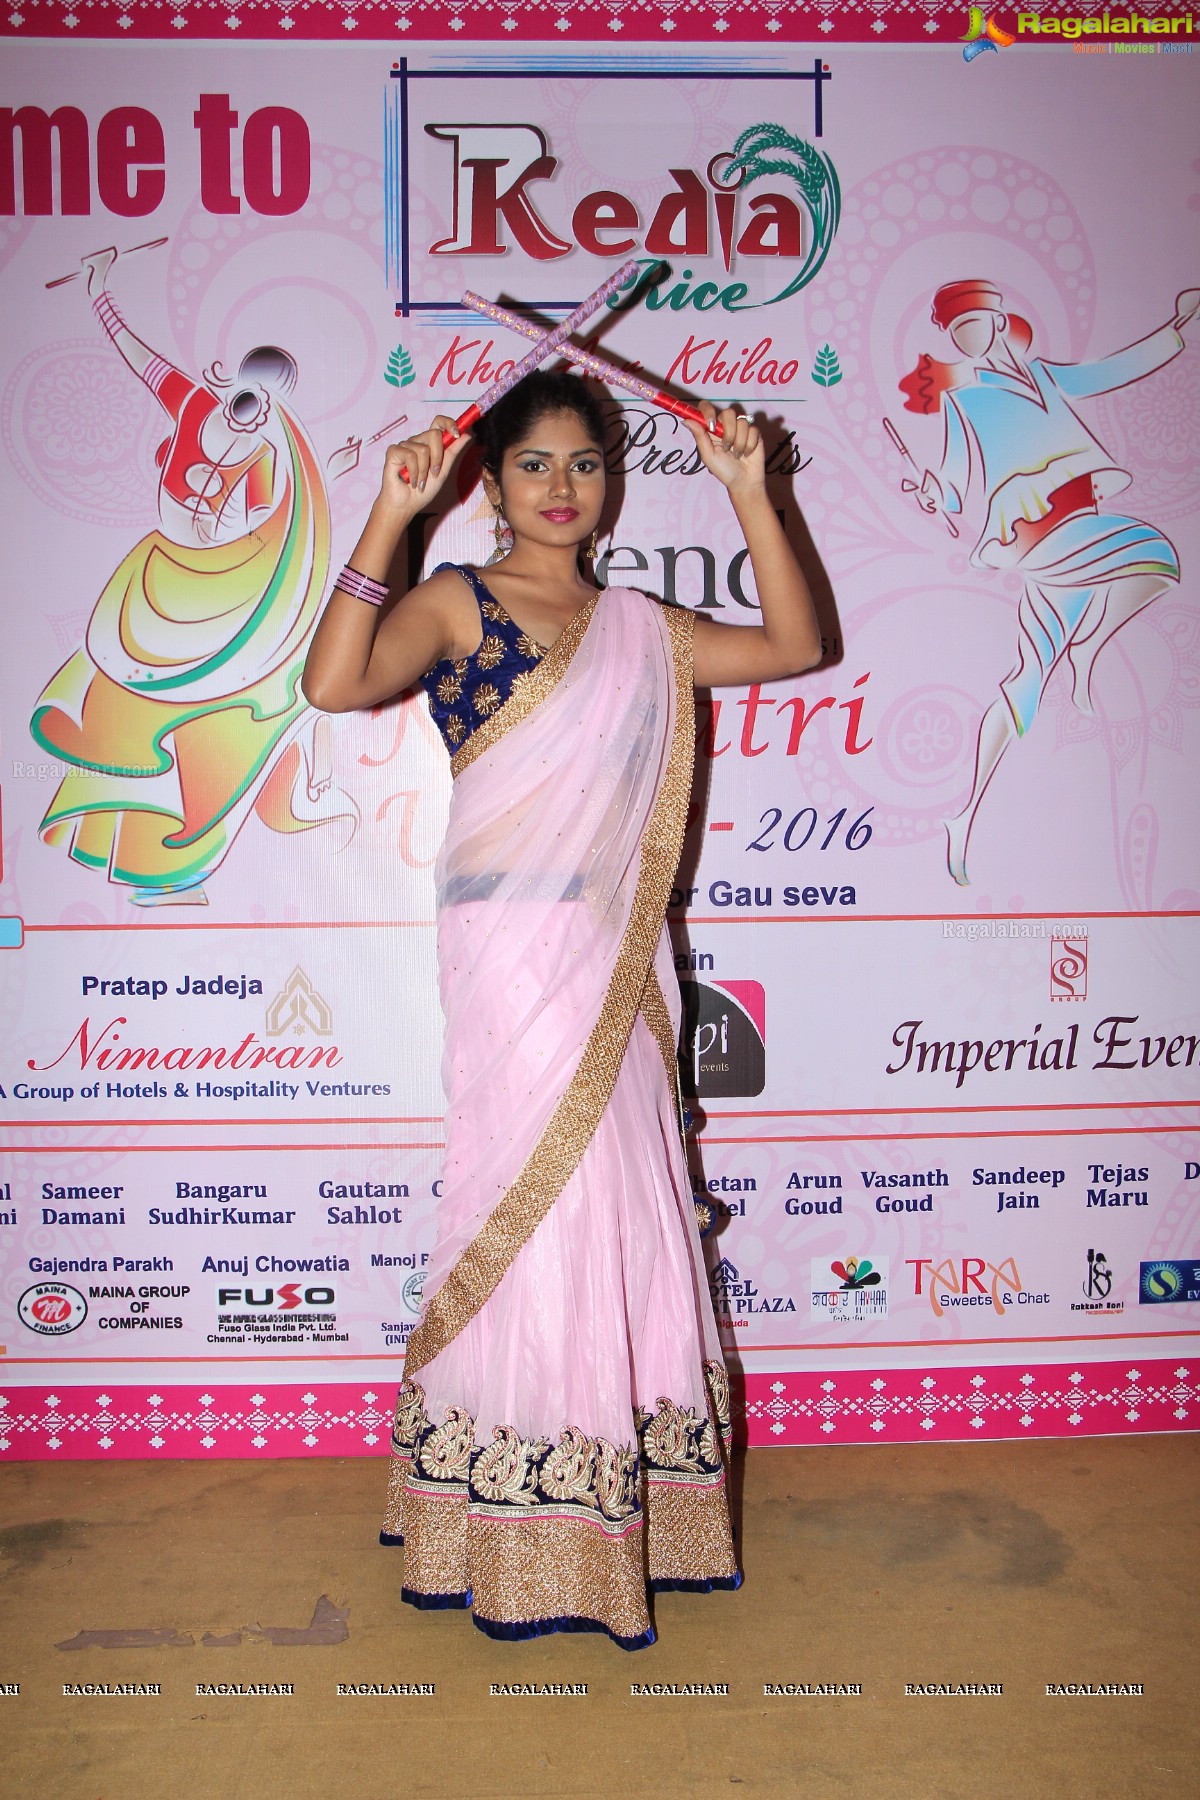 Legend Navratri Utsav 2016 Curtain Raiser